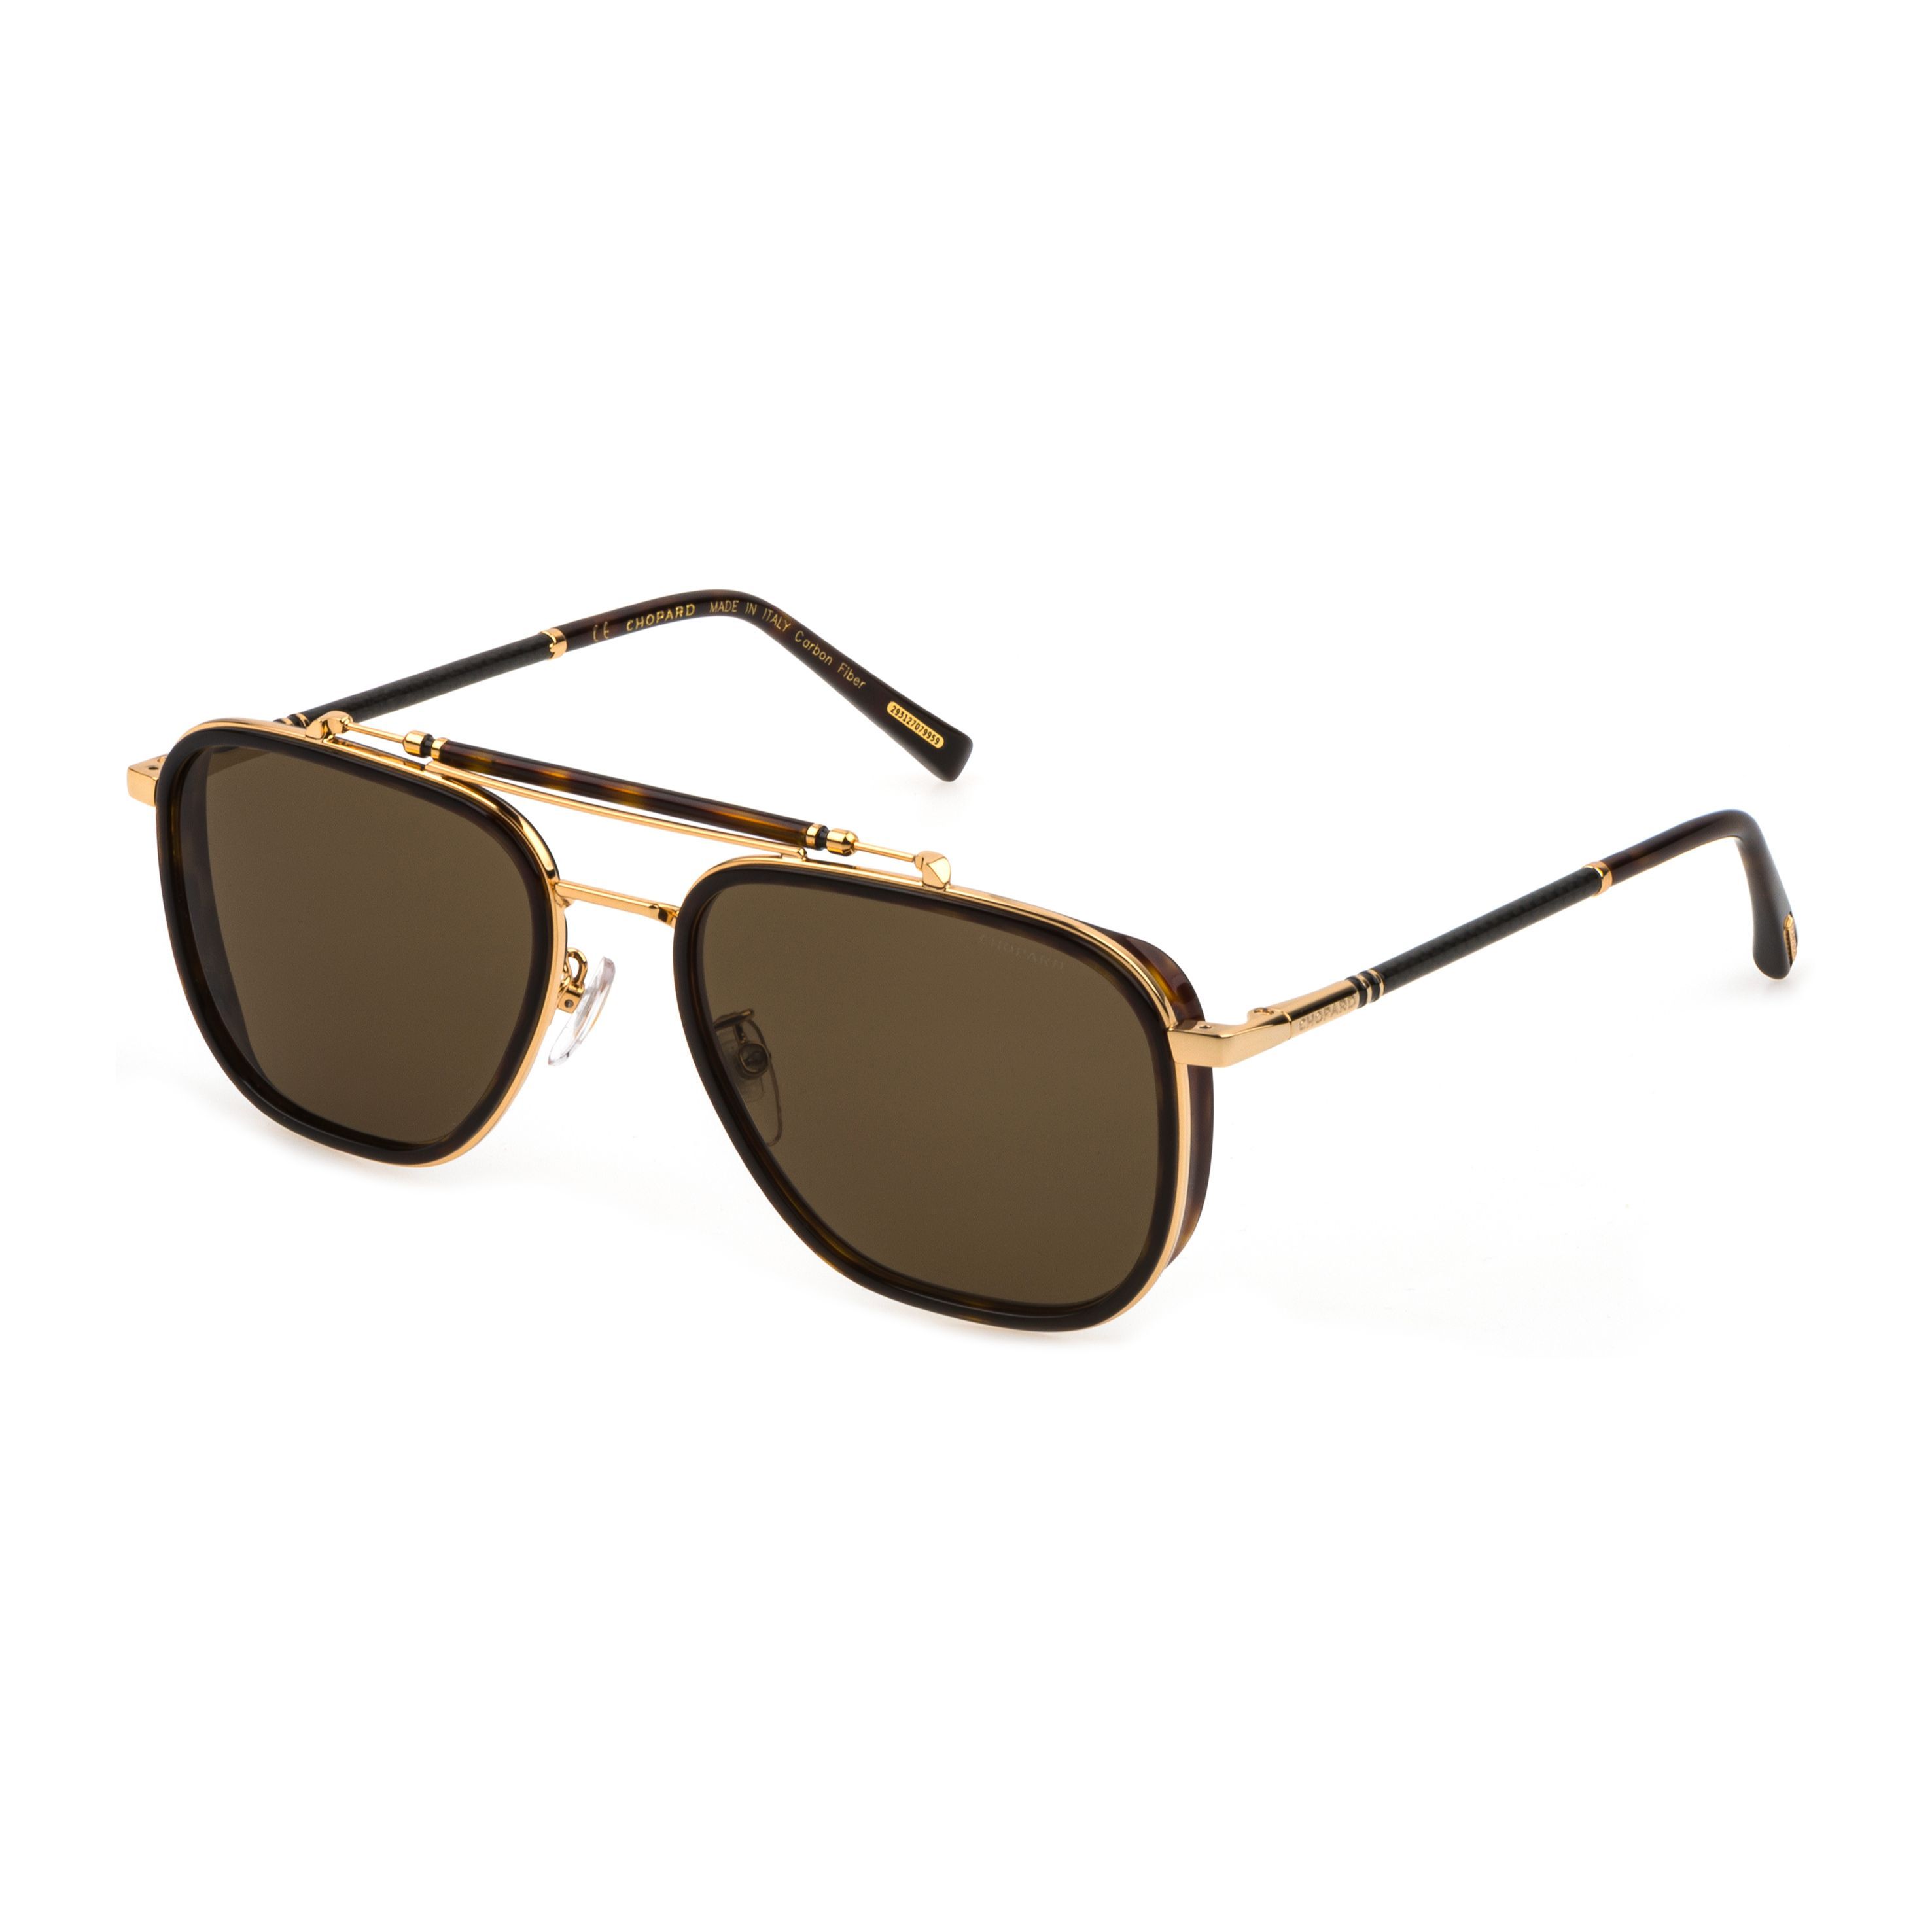 SCHF25 Rectangle Sunglasses 722P - size 57